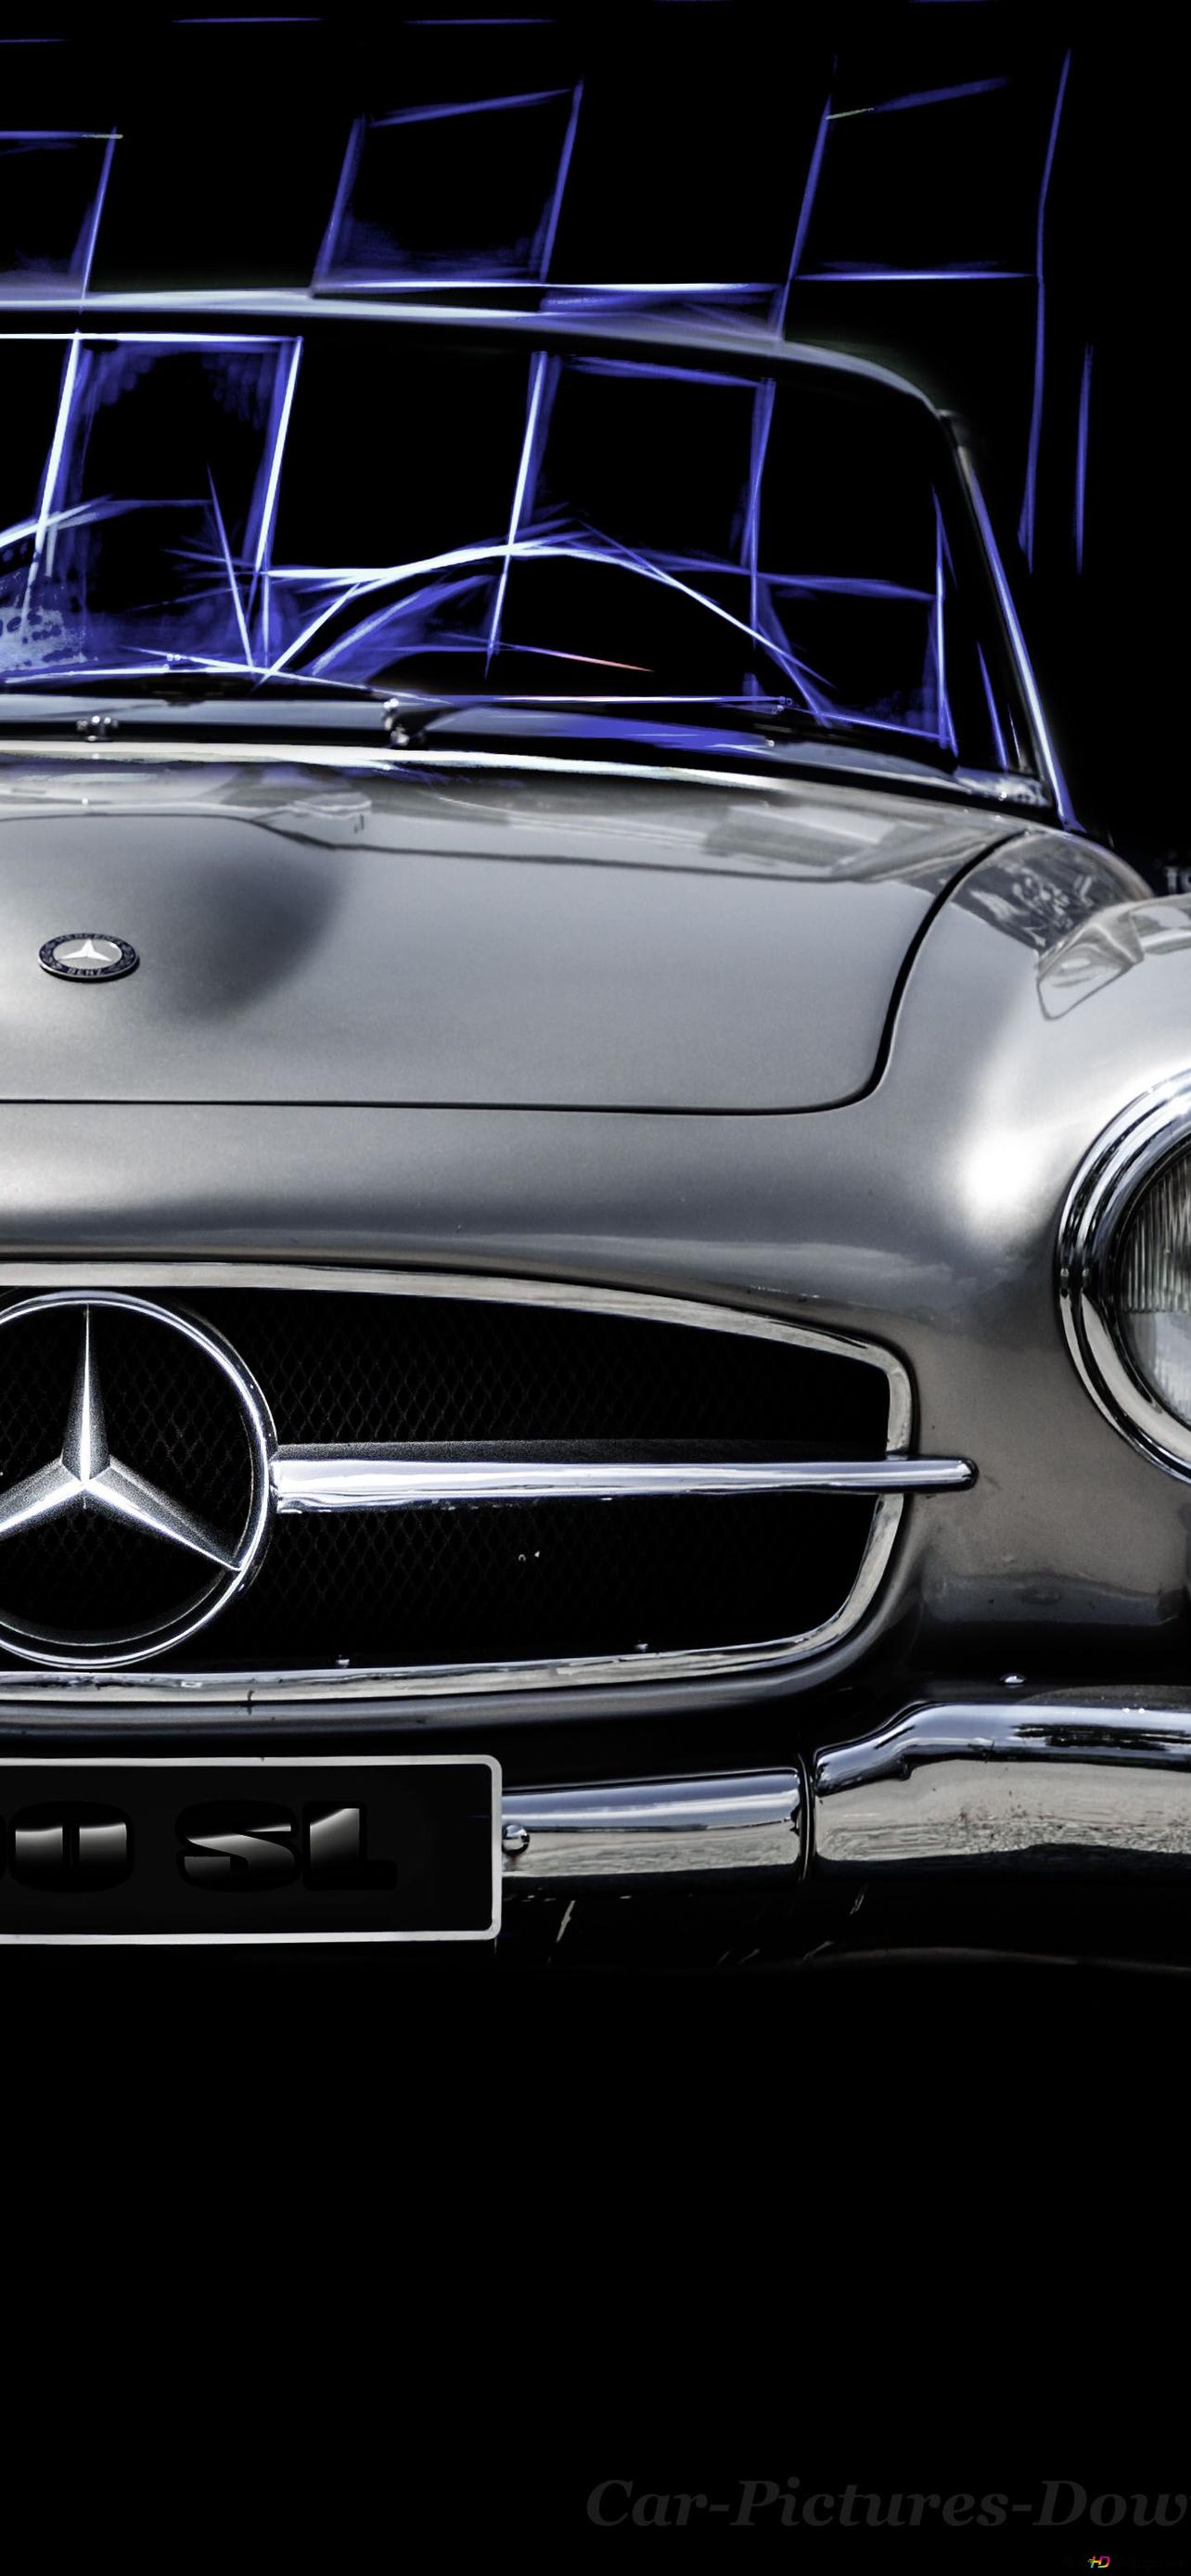 Legendary vintage convertible Mercedes in front of purple lights background 2K wallpaper download